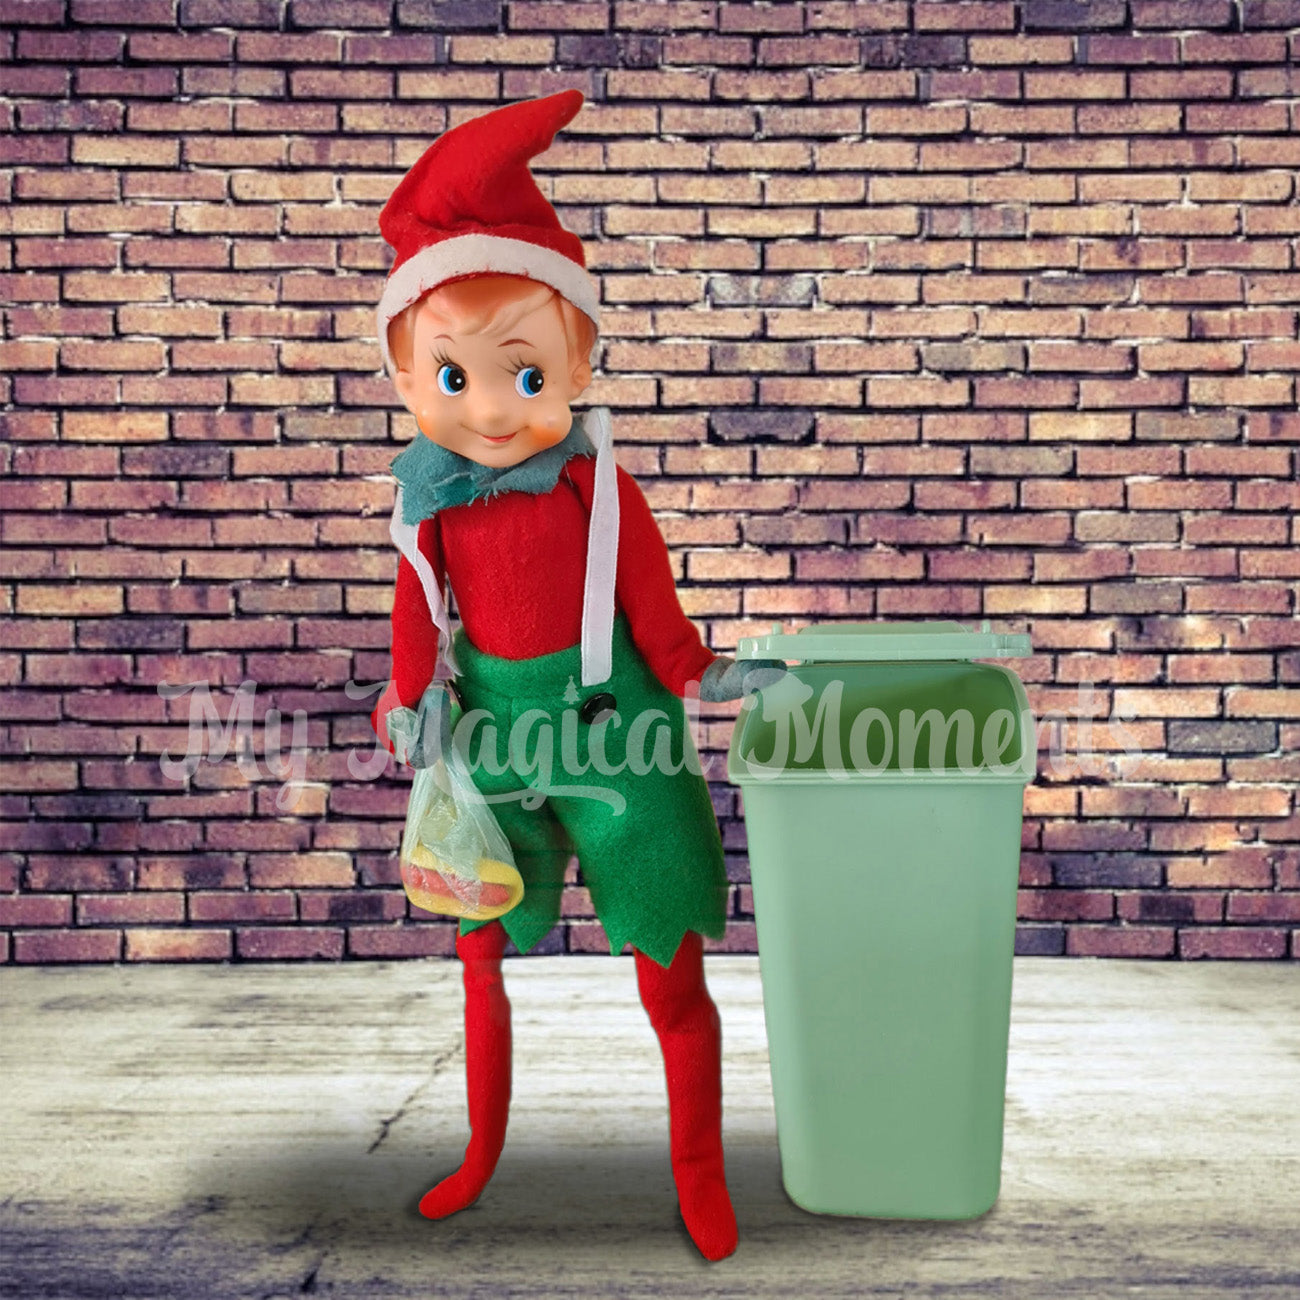 Elf using a bin prop to take our miniature trash